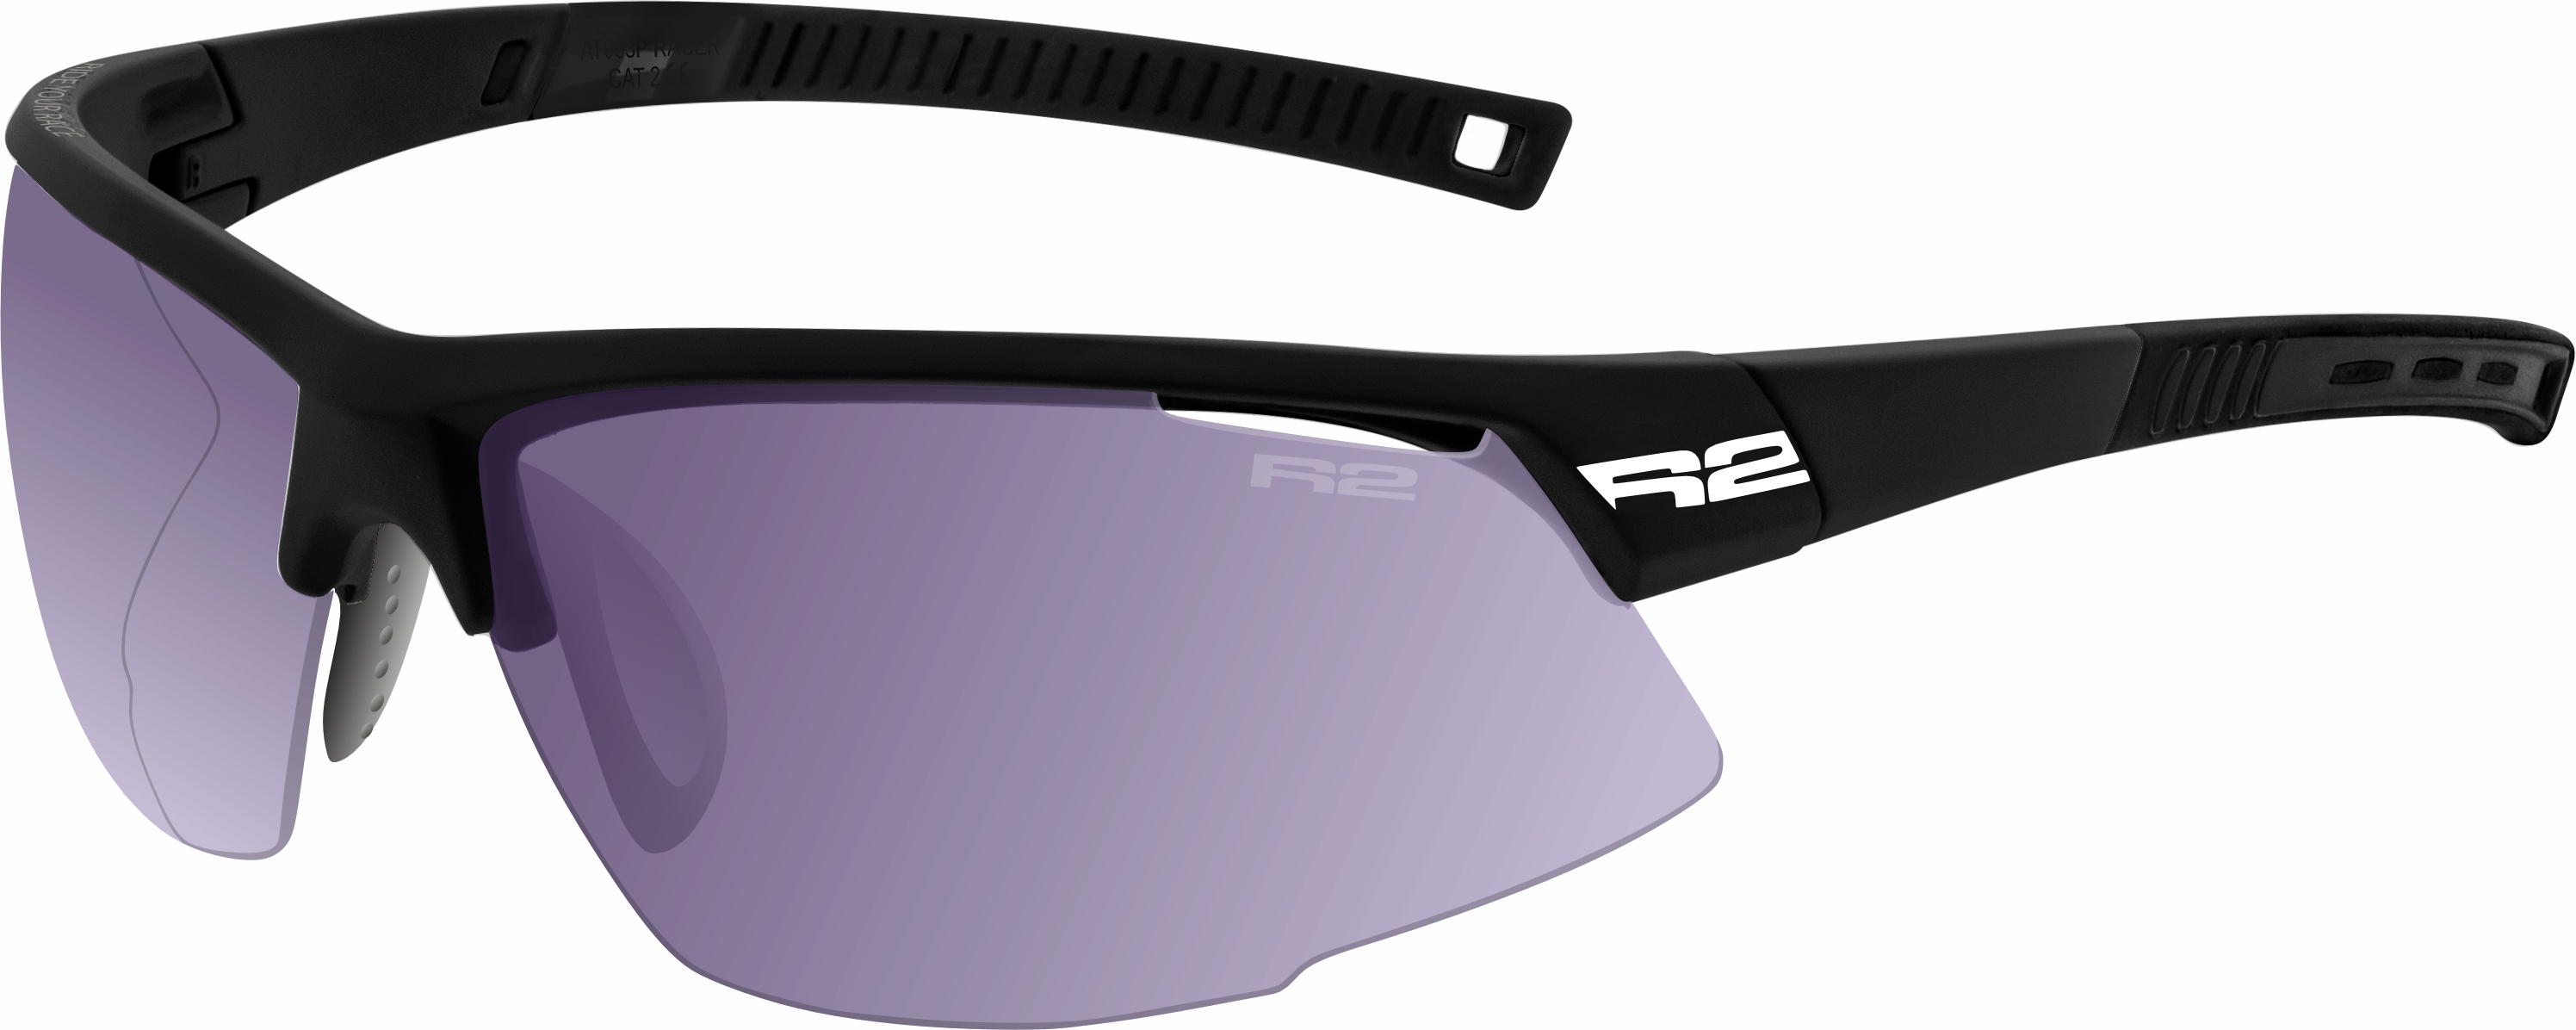 Sport sunglasses R2 RACER AT063Z